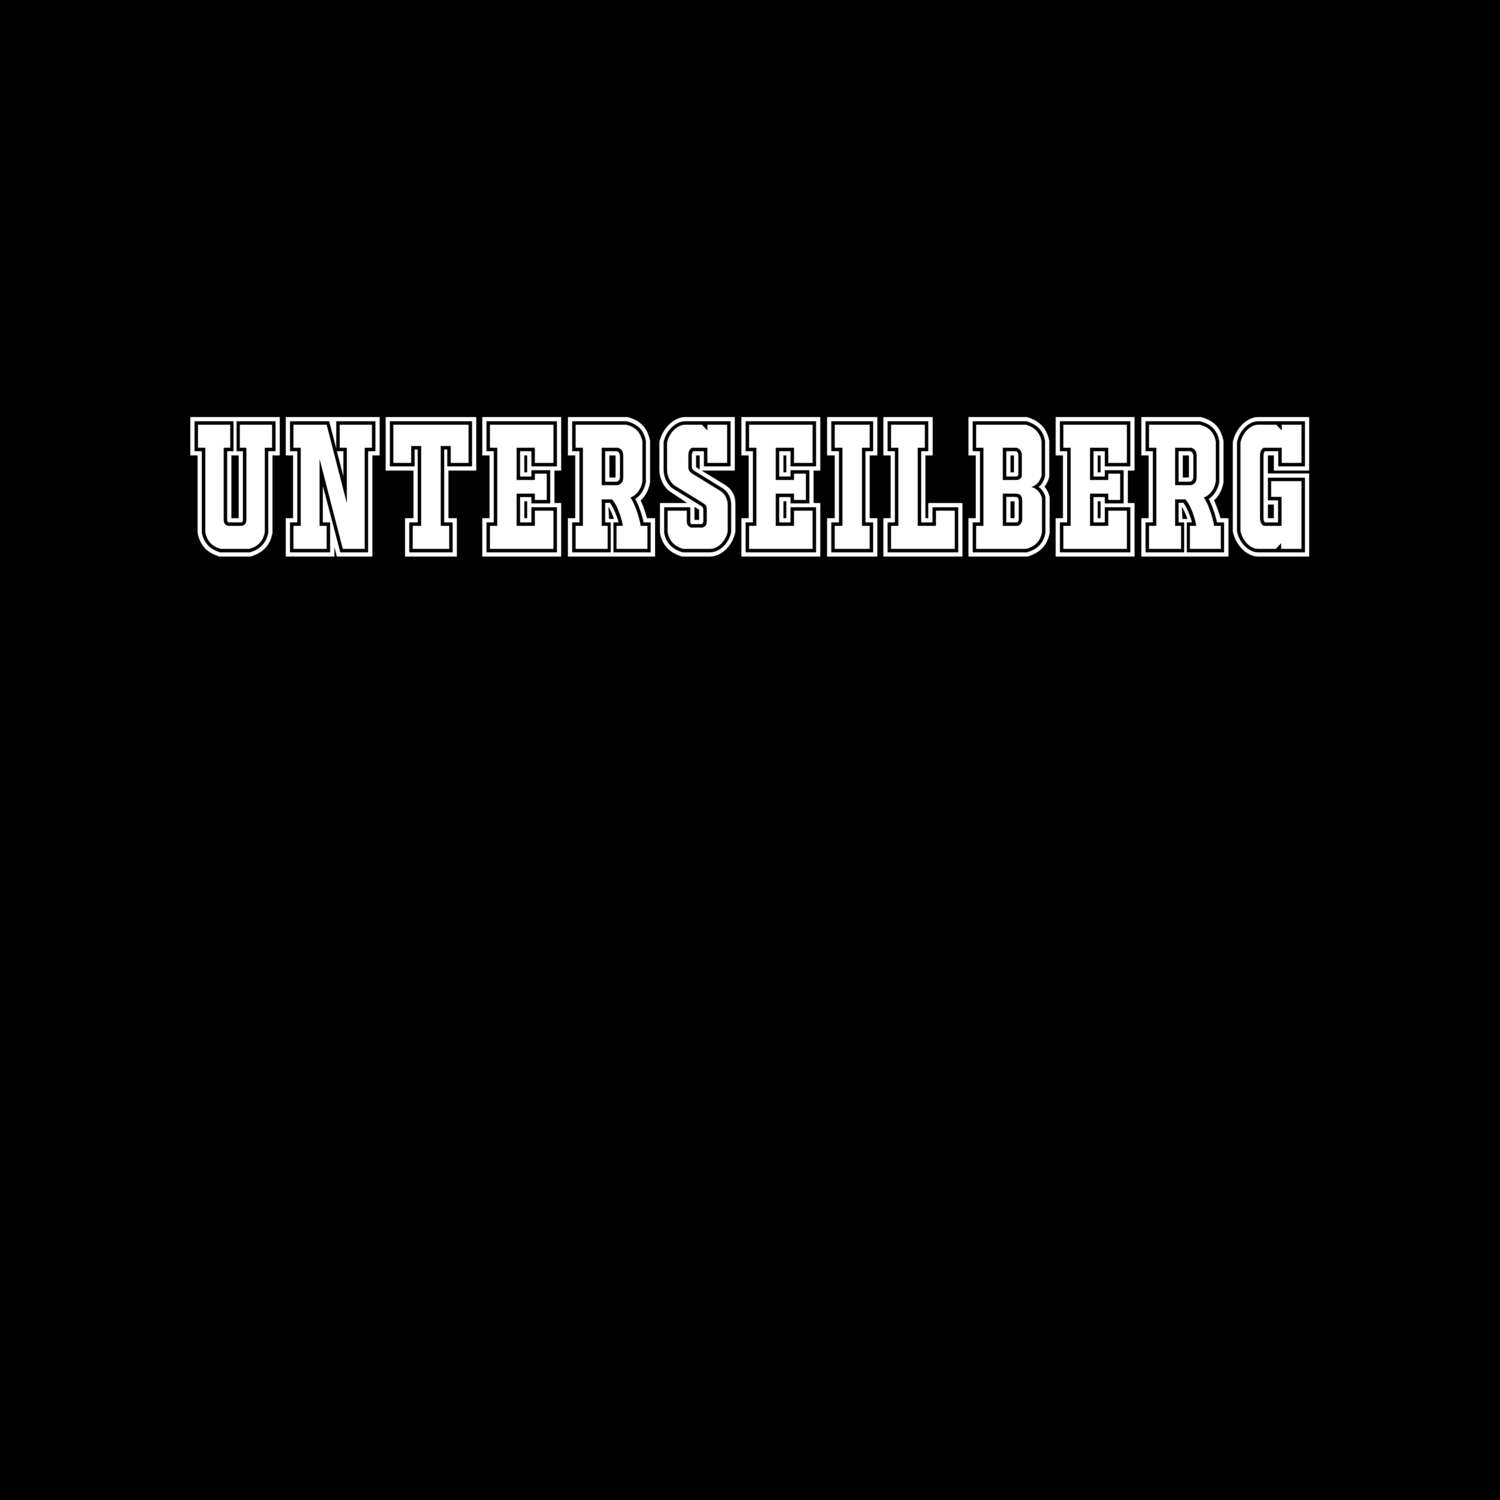 Unterseilberg T-Shirt »Classic«